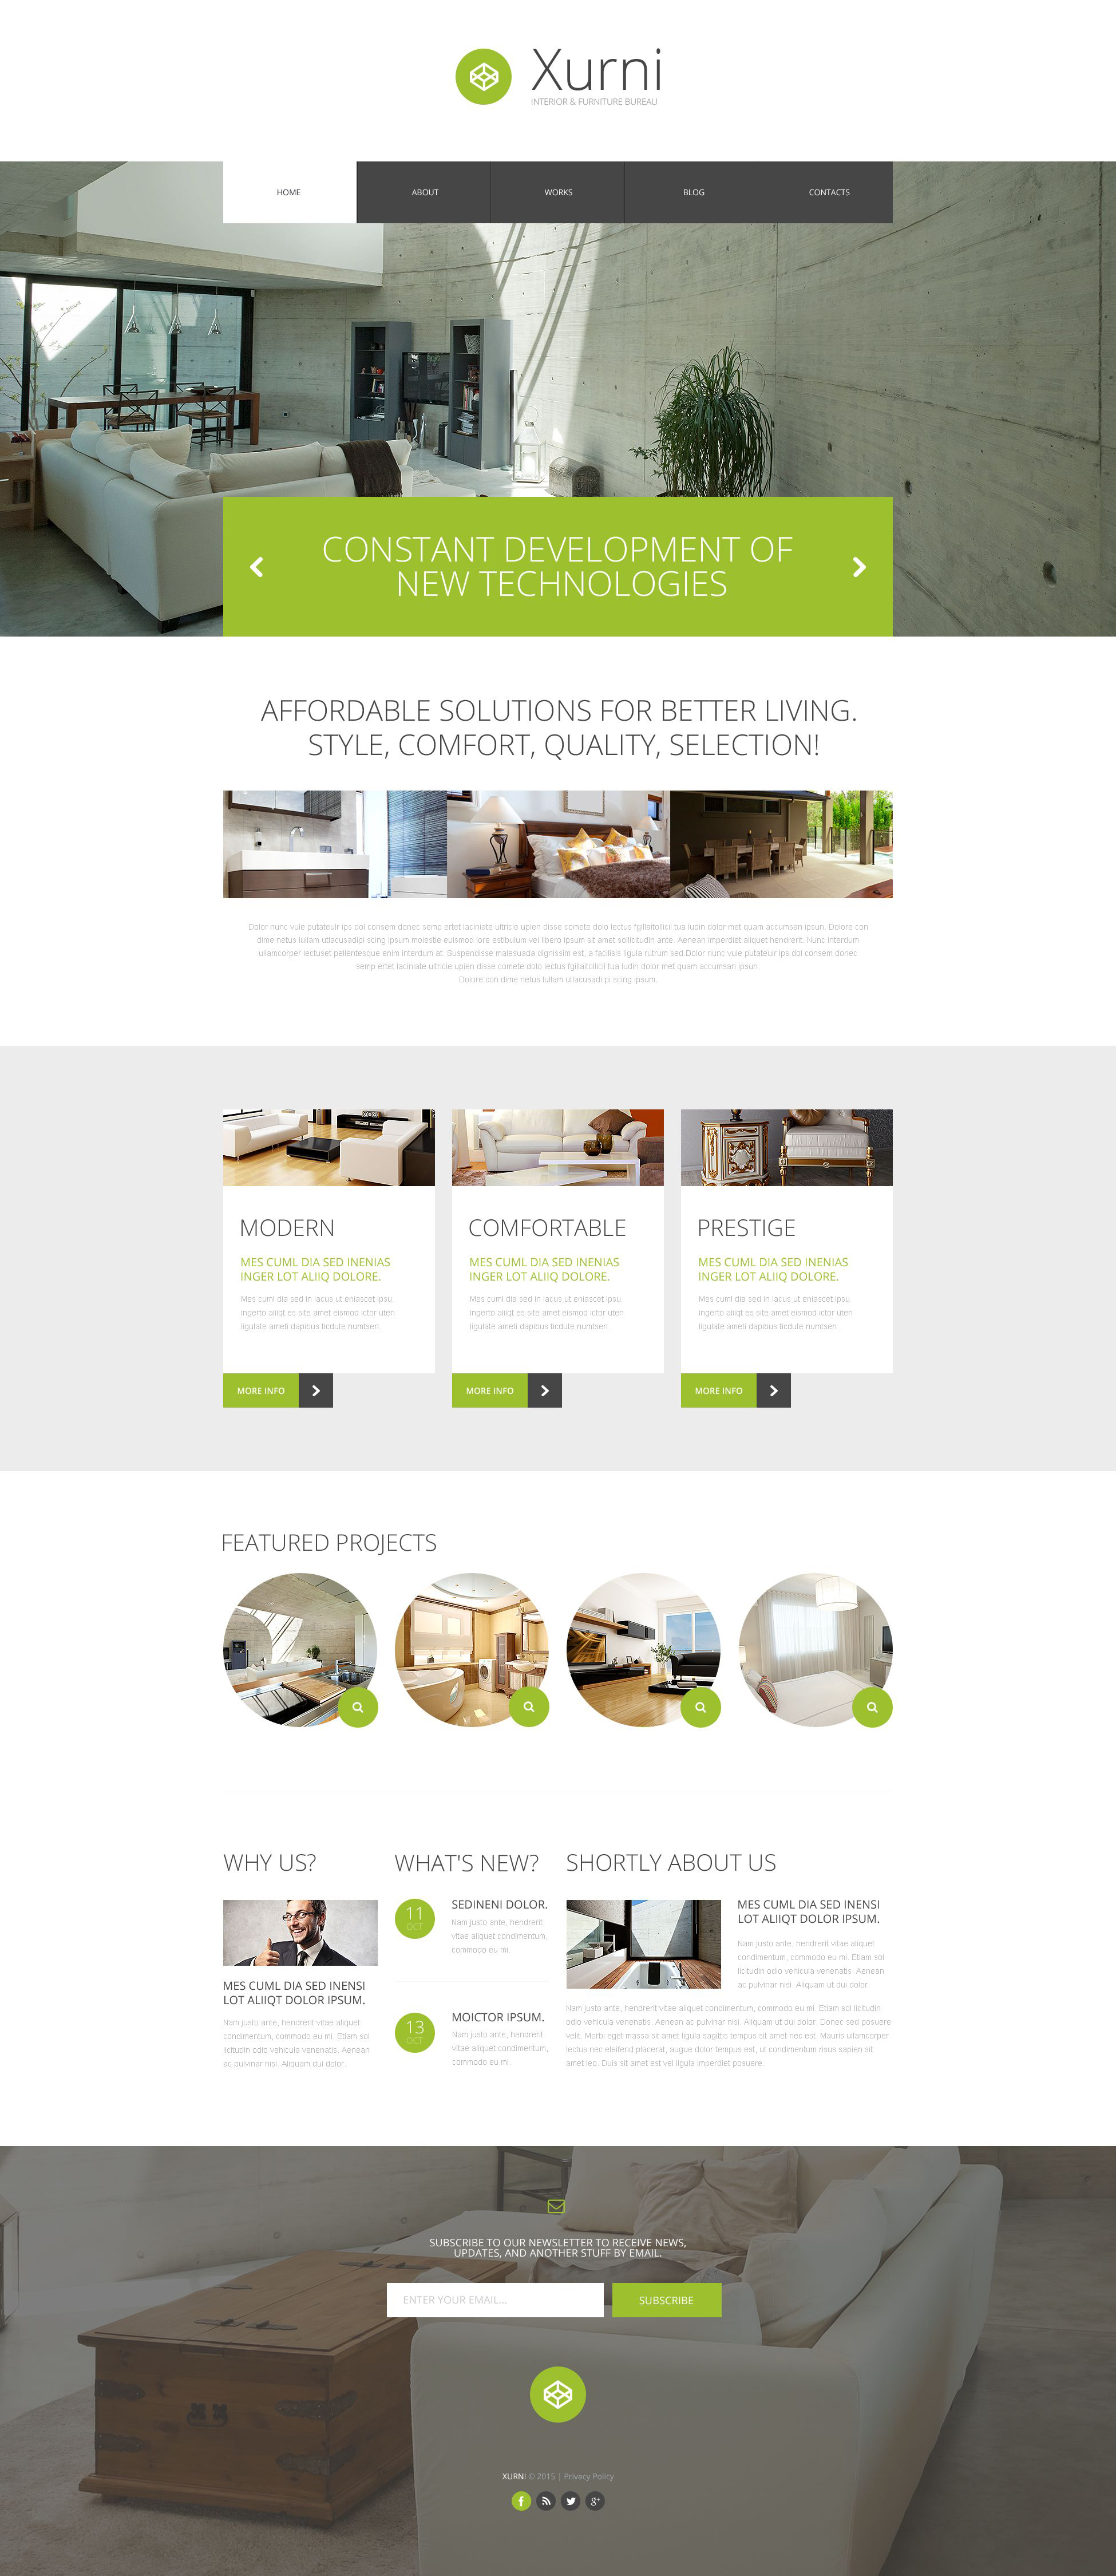 Stylko - Home Interior and Furniture WordPress Theme